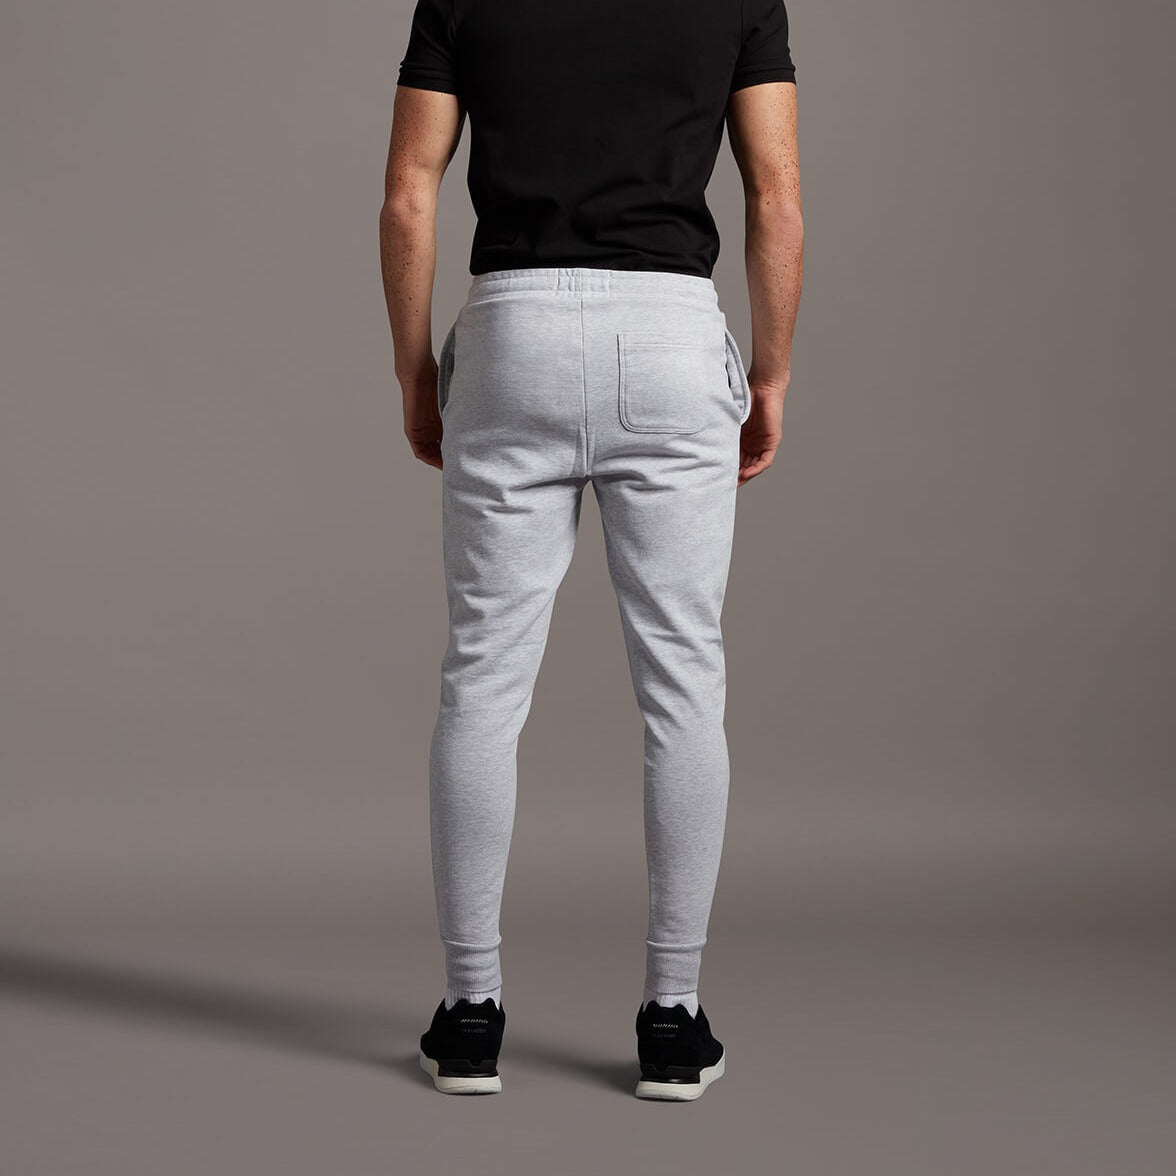 Lyle & Scott Men's Skinny Sweatpants Light Grey